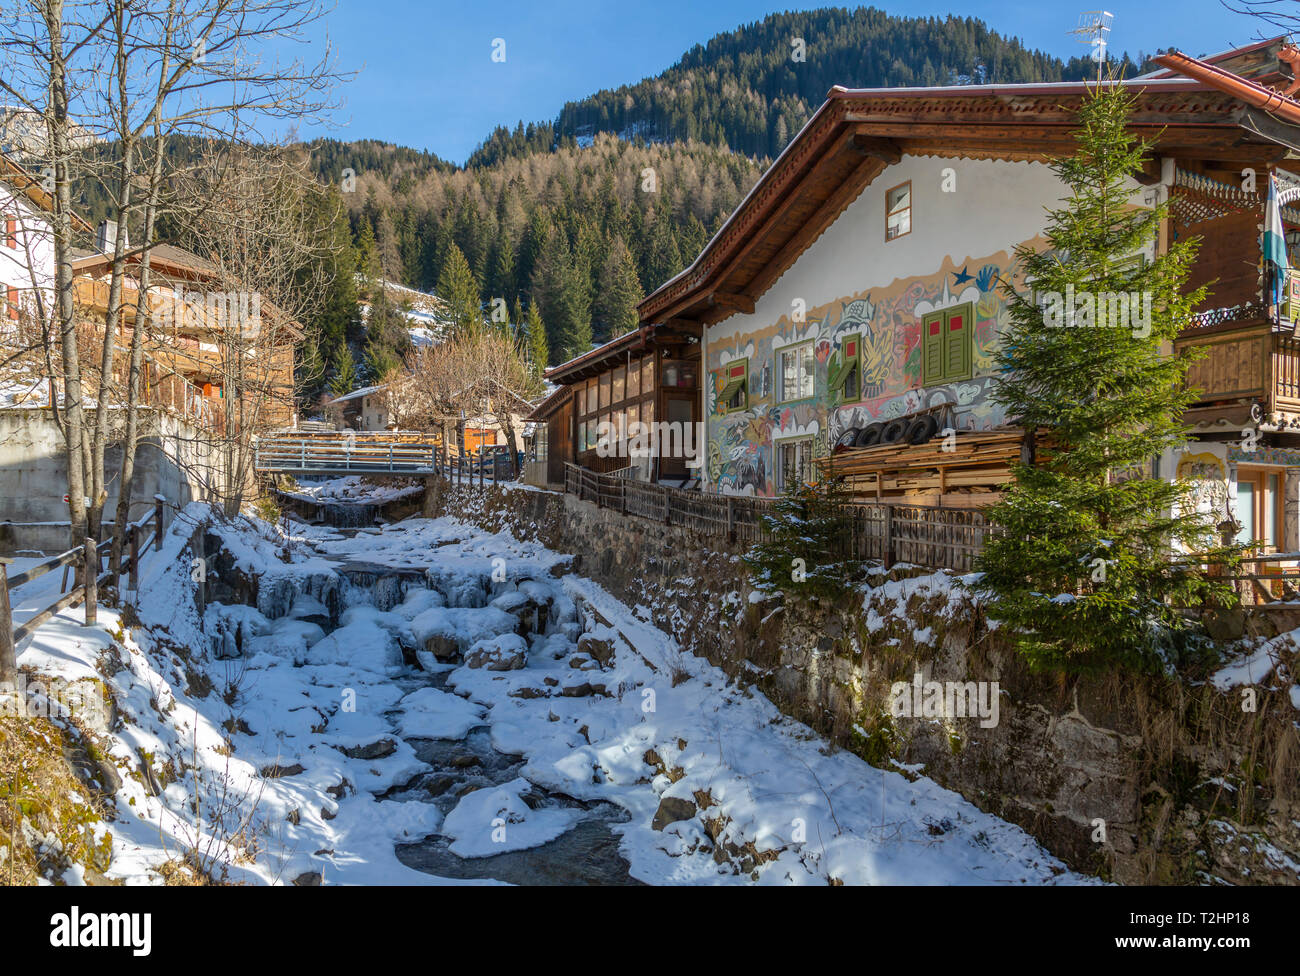 View of frozen river in Canazei town centre in winter, Val di Fassa, Trentino, Italy, Europe Stock Photo